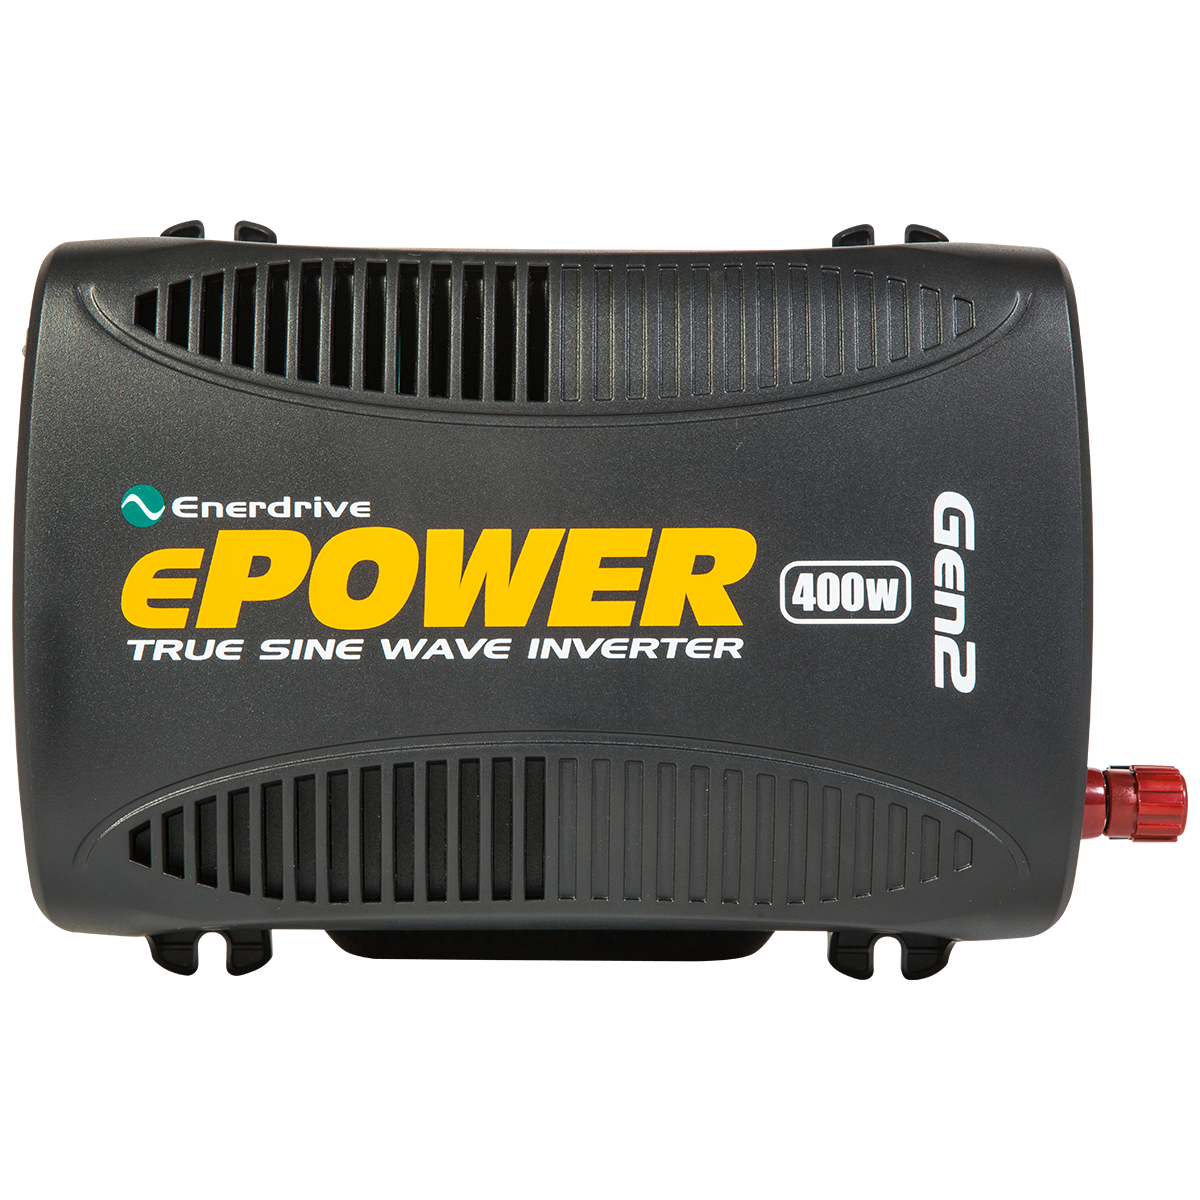 ePOWER 400W Generation 2 True Sine Wave Inverter - ENERDRIVE